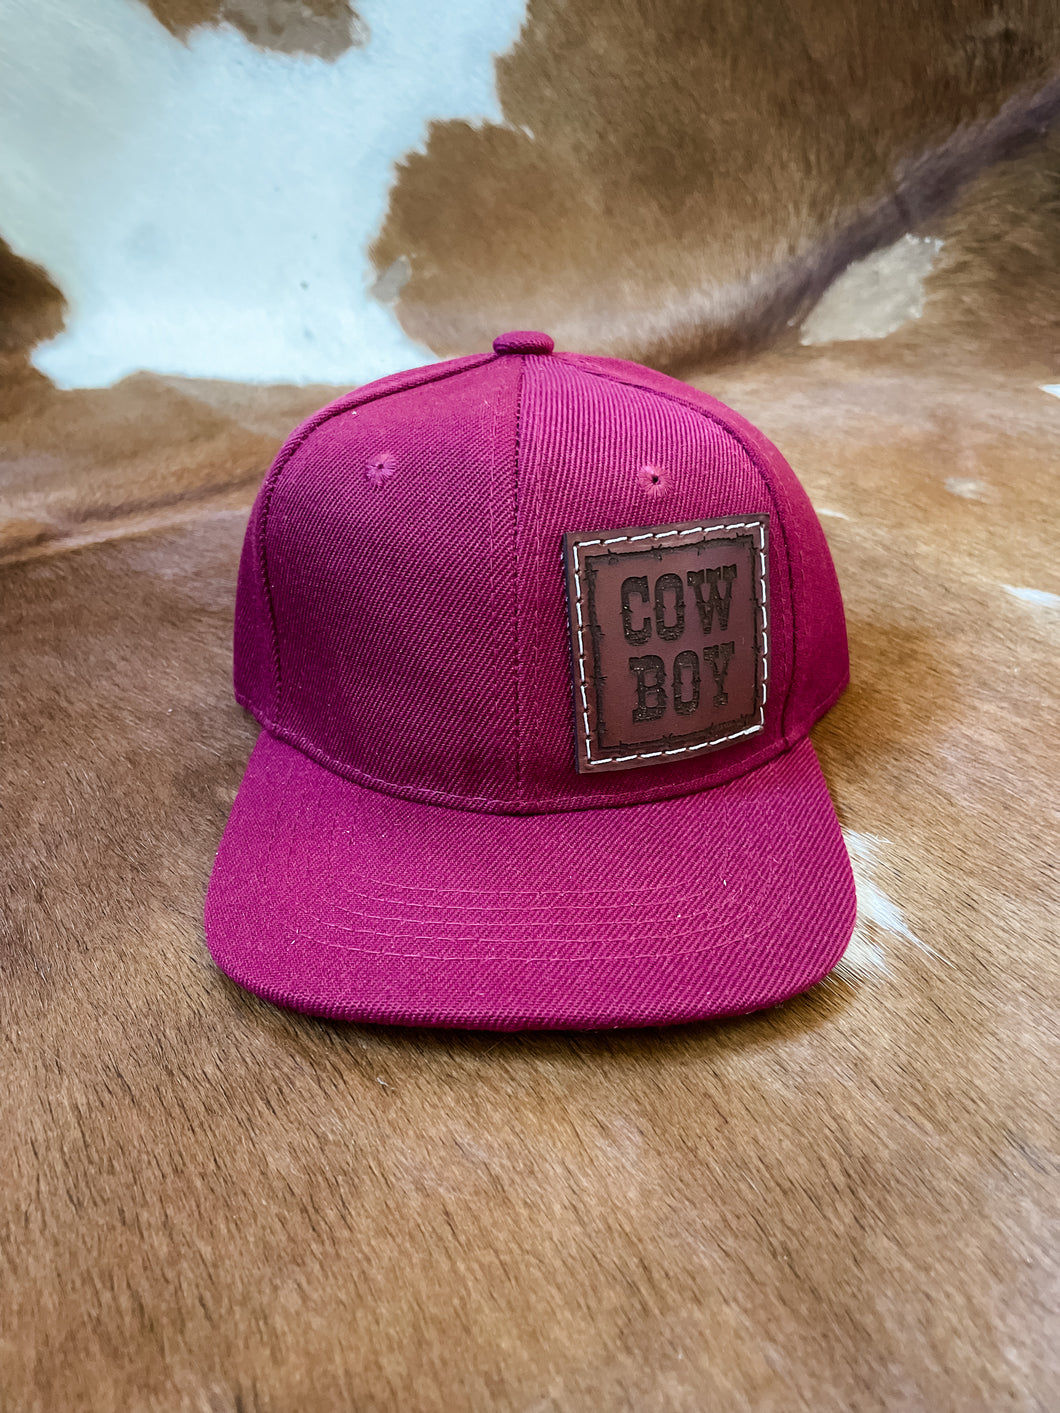 Cowboy Infant Cap